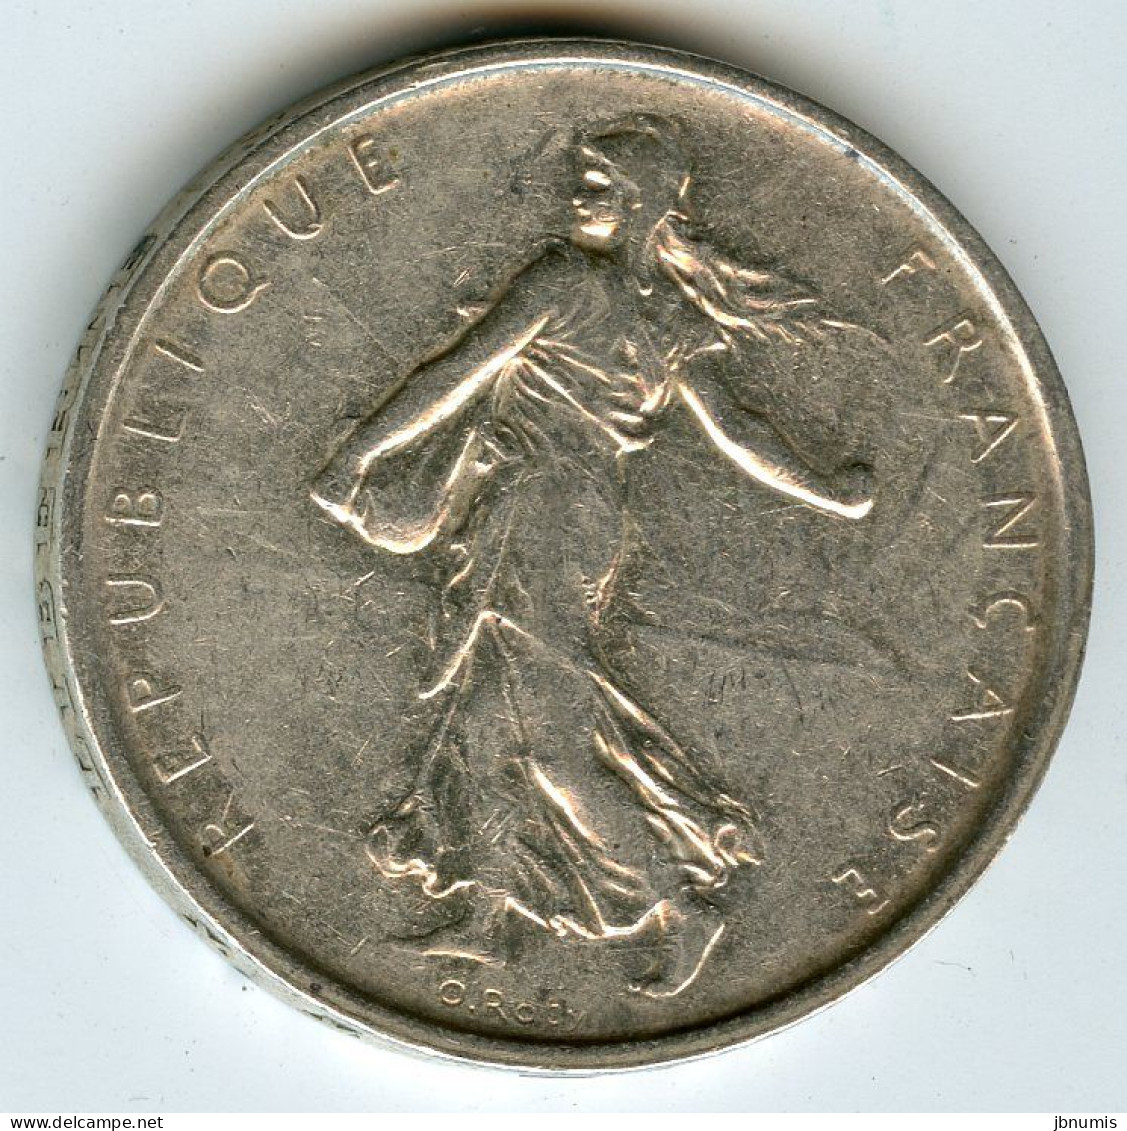 France 5 Francs 1963 Argent GAD 770 KM 926 - 5 Francs